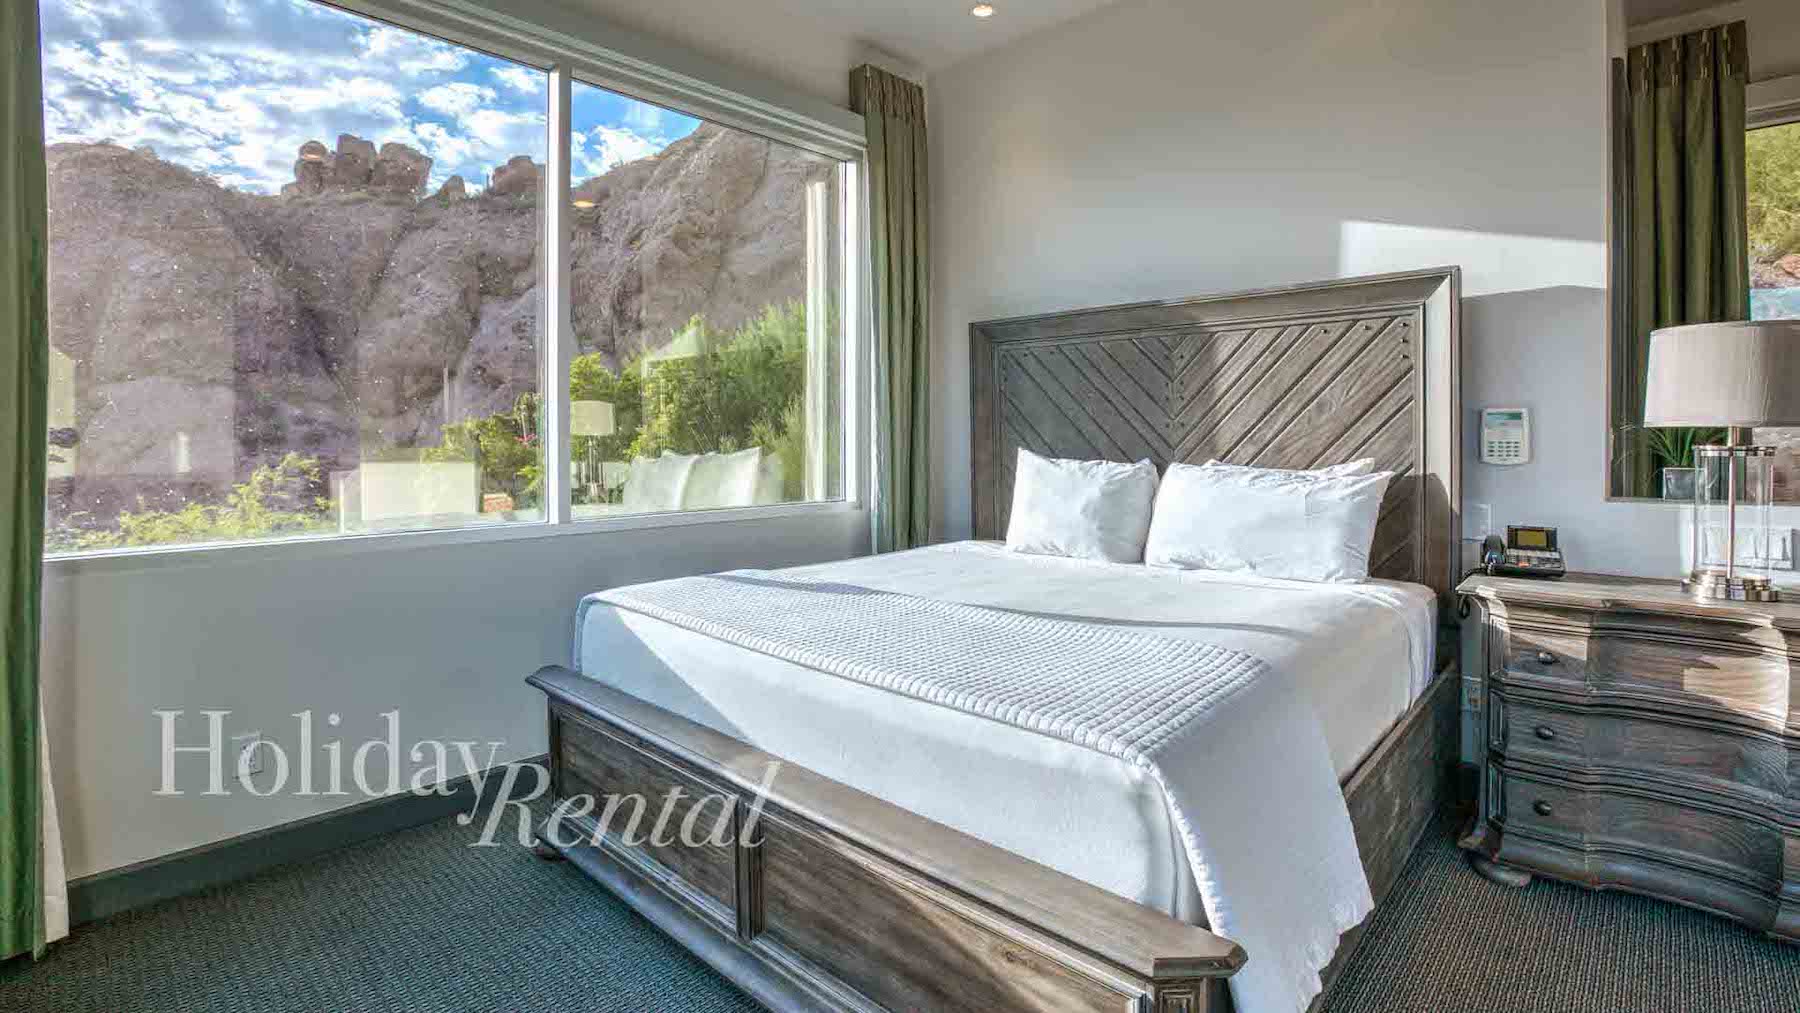 vacation rental bedroom with window views